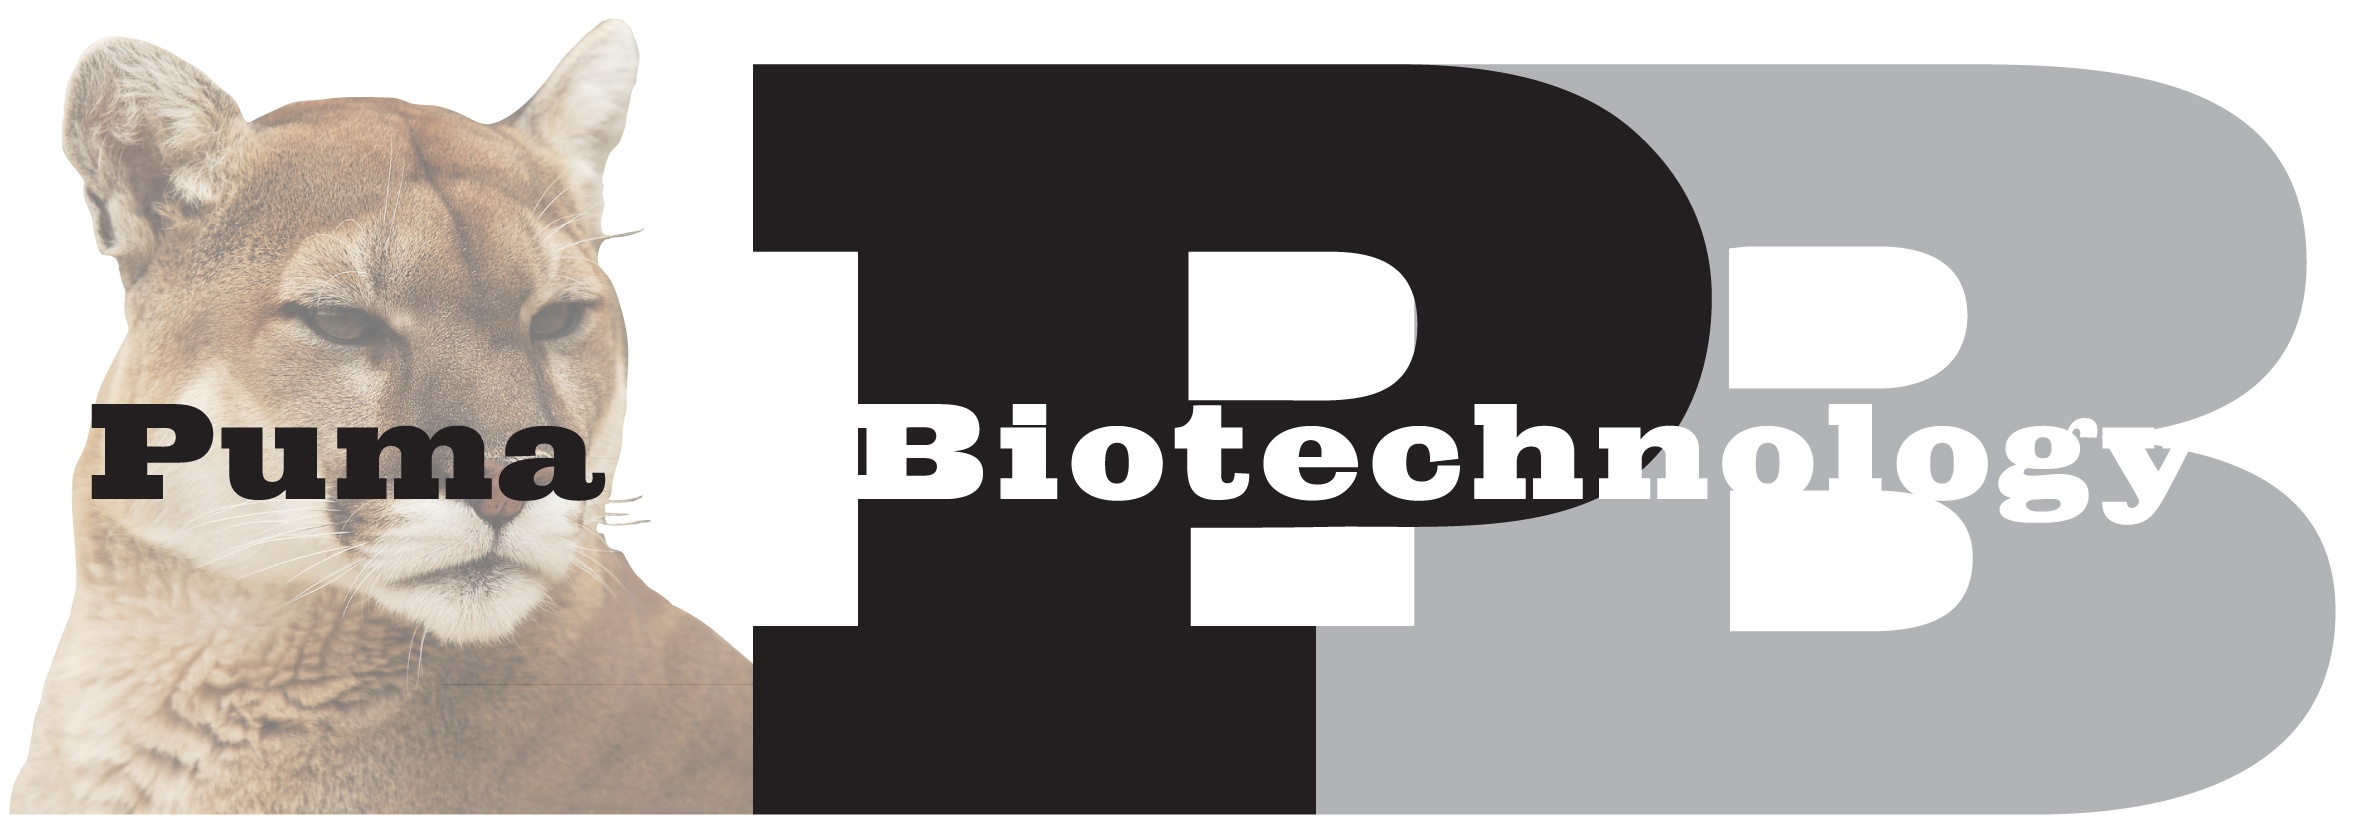 Puma Biotechnology and Strata Oncology 